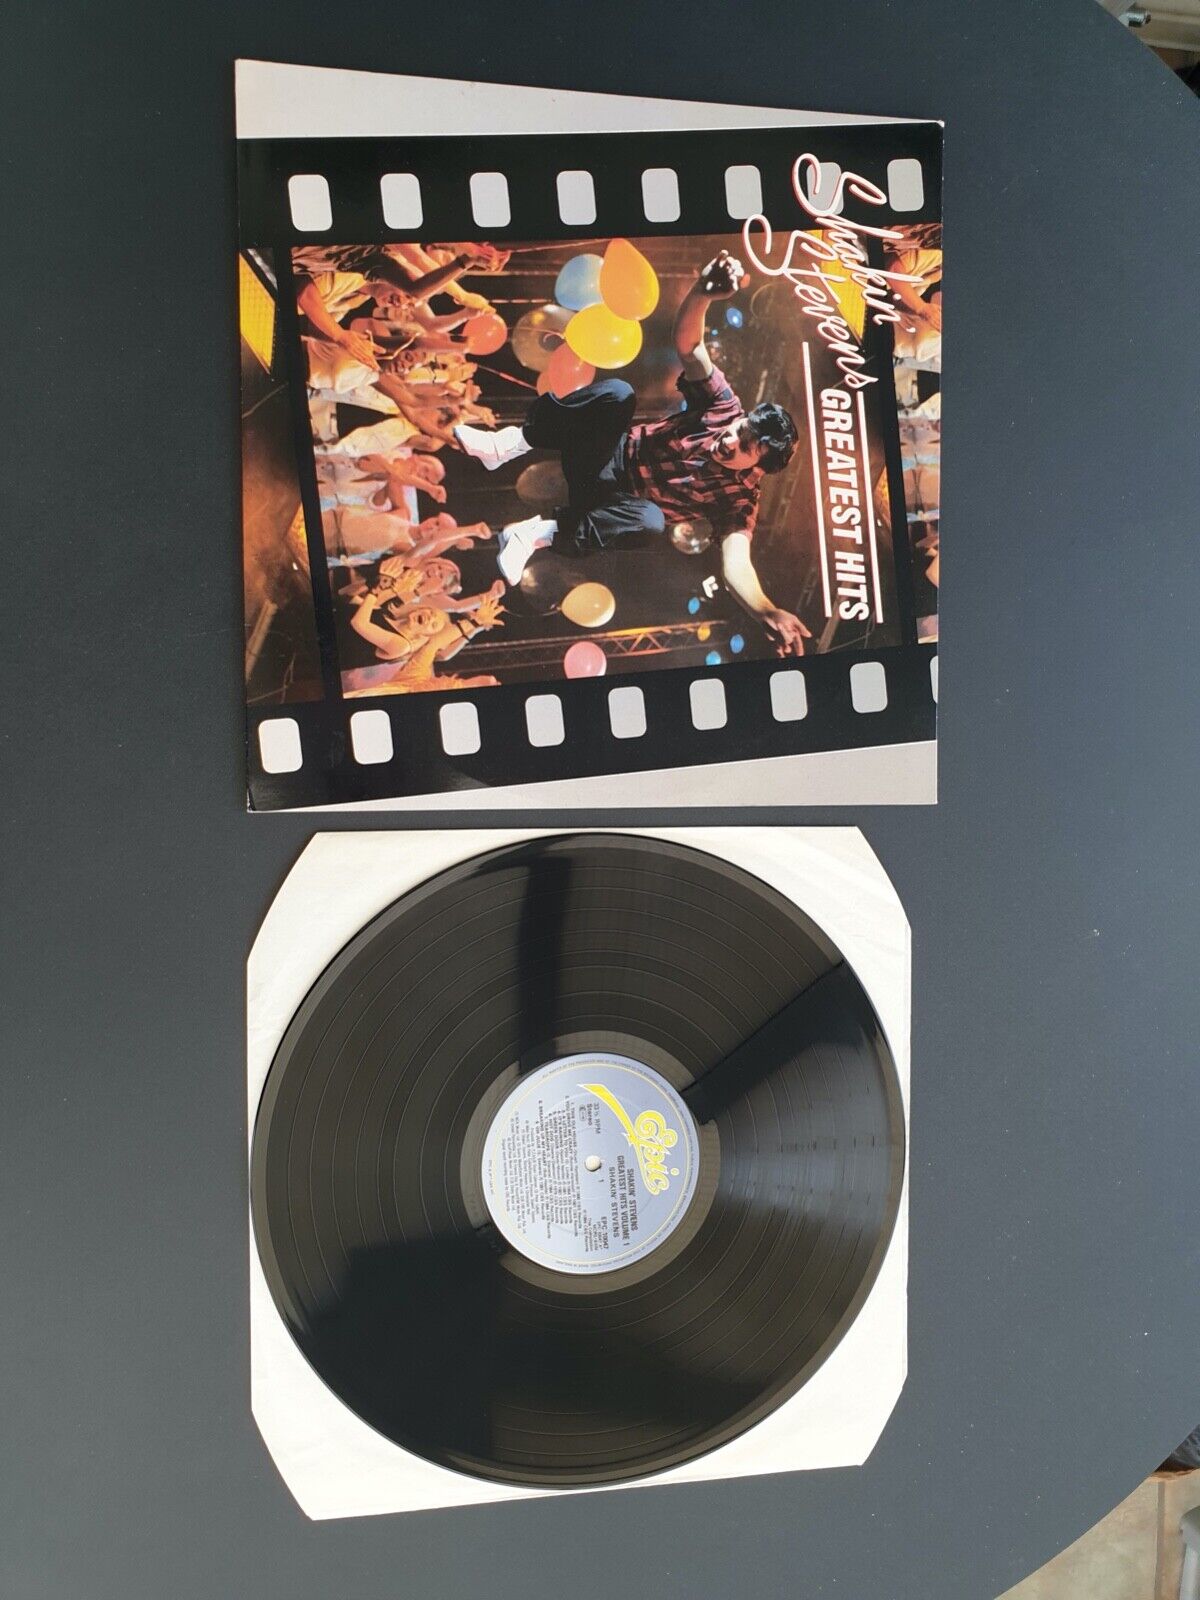 SHAKIN' STEVENS GREATEST HITS VOLUME 1 1984 12" VINYL RECORD LP                 